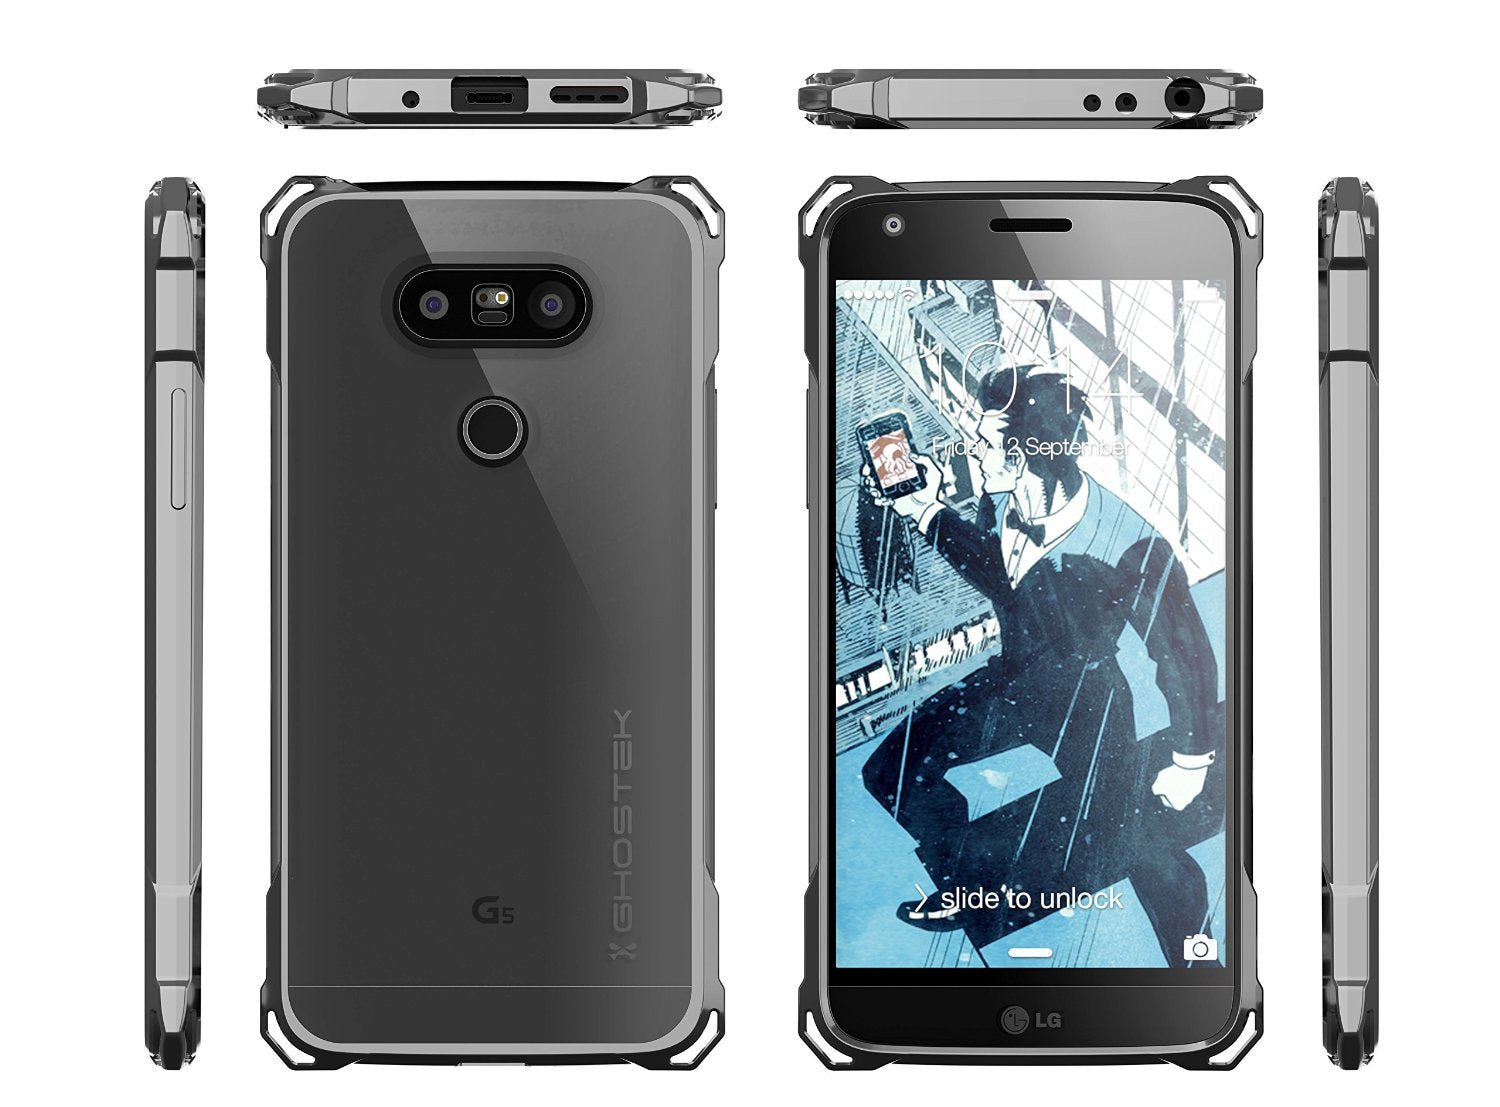 LG G5 Case, Ghostek® Space Grey Covert Premium Hybrid Protective Cover | Lifetime Warranty Exchange - PunkCase NZ